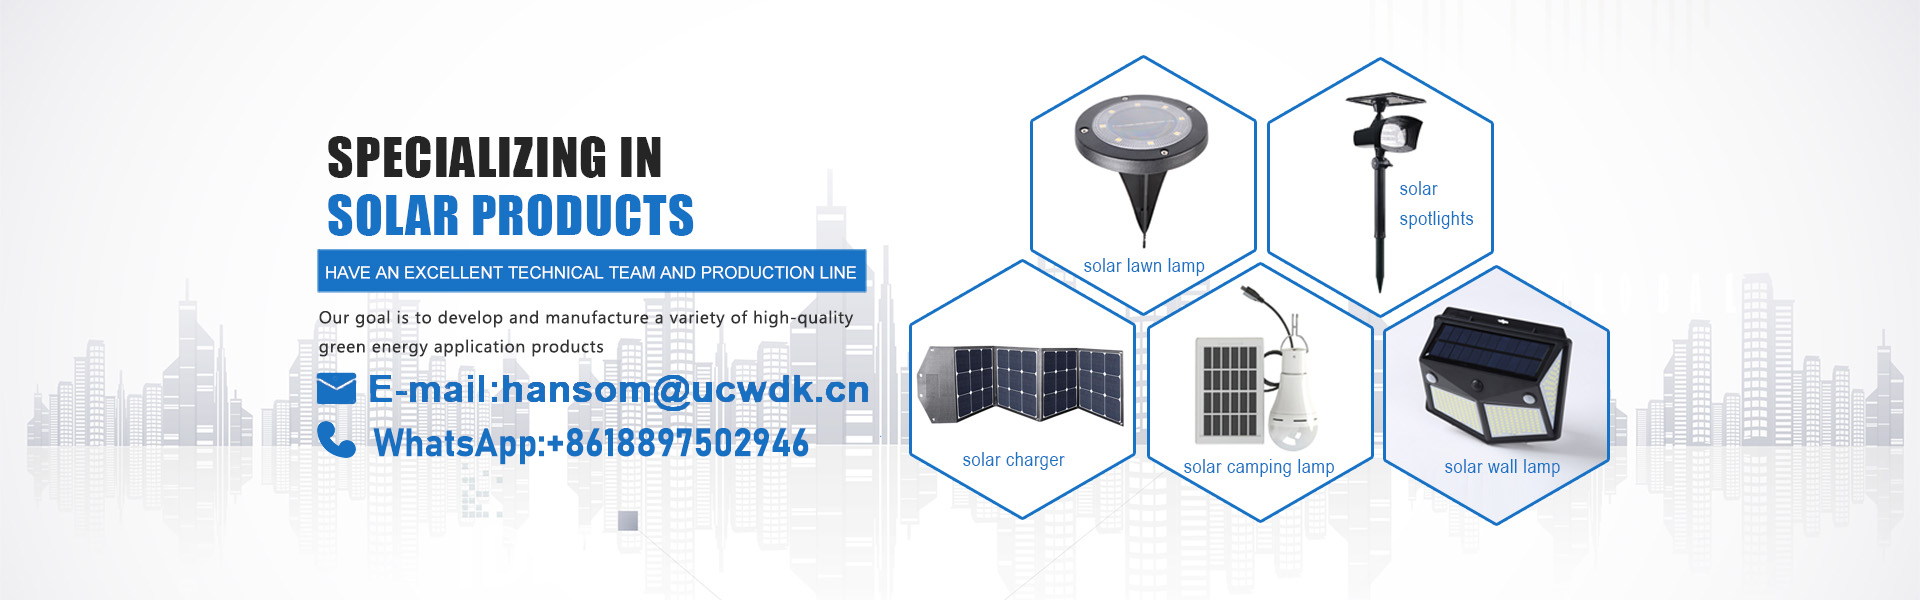 Carregador solar, luz solar, painel solar,UCWDK Solar Technology Co. Ltd.